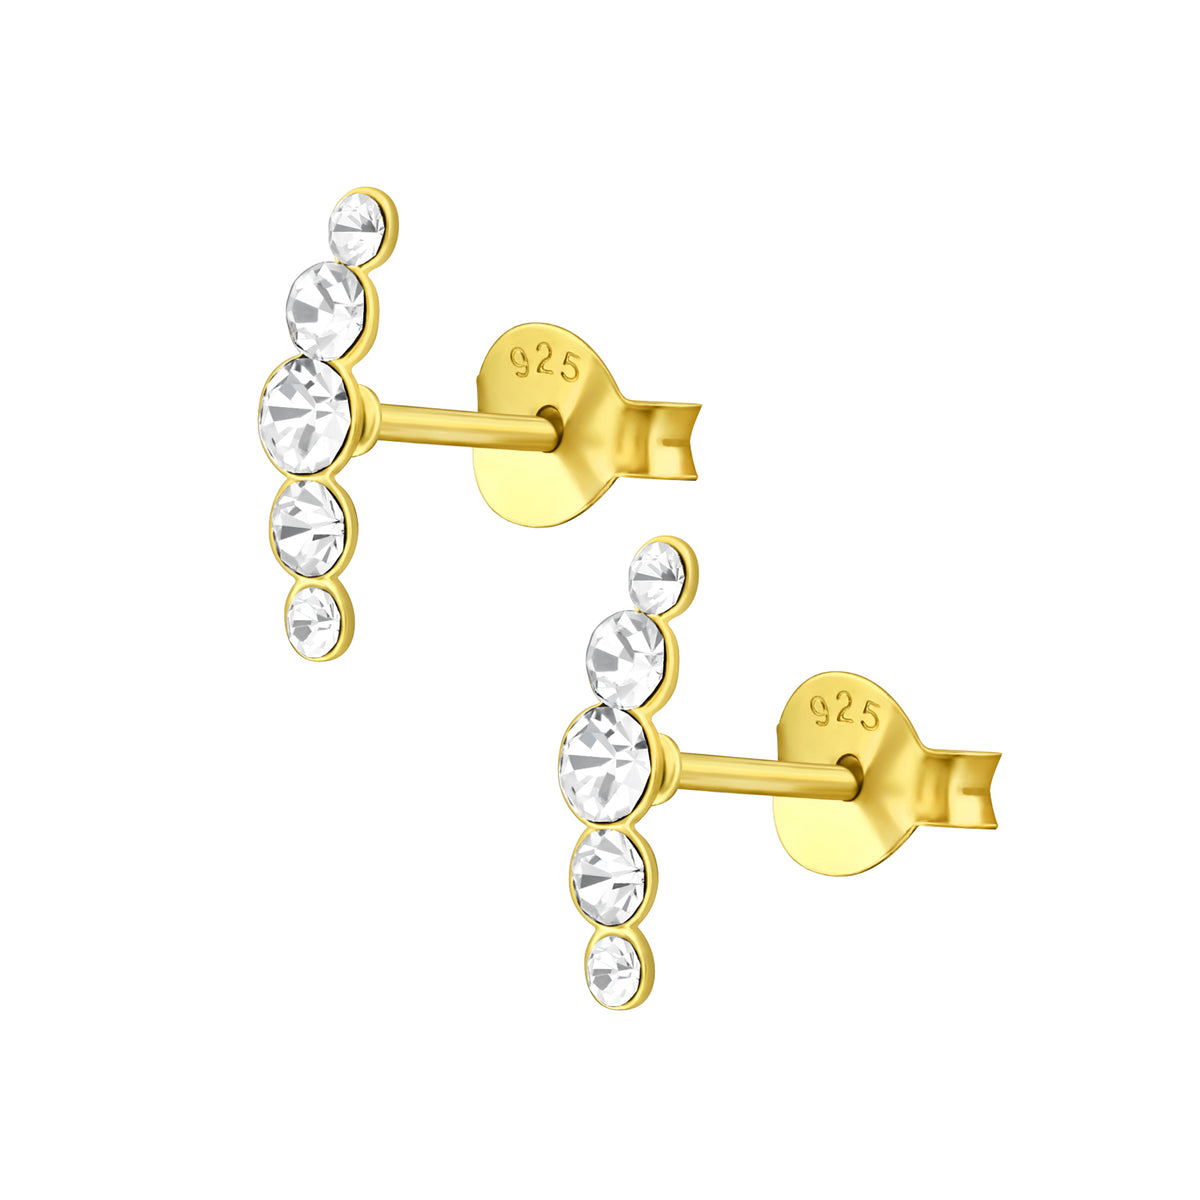 Diamond Romance silver earrings, gold plated